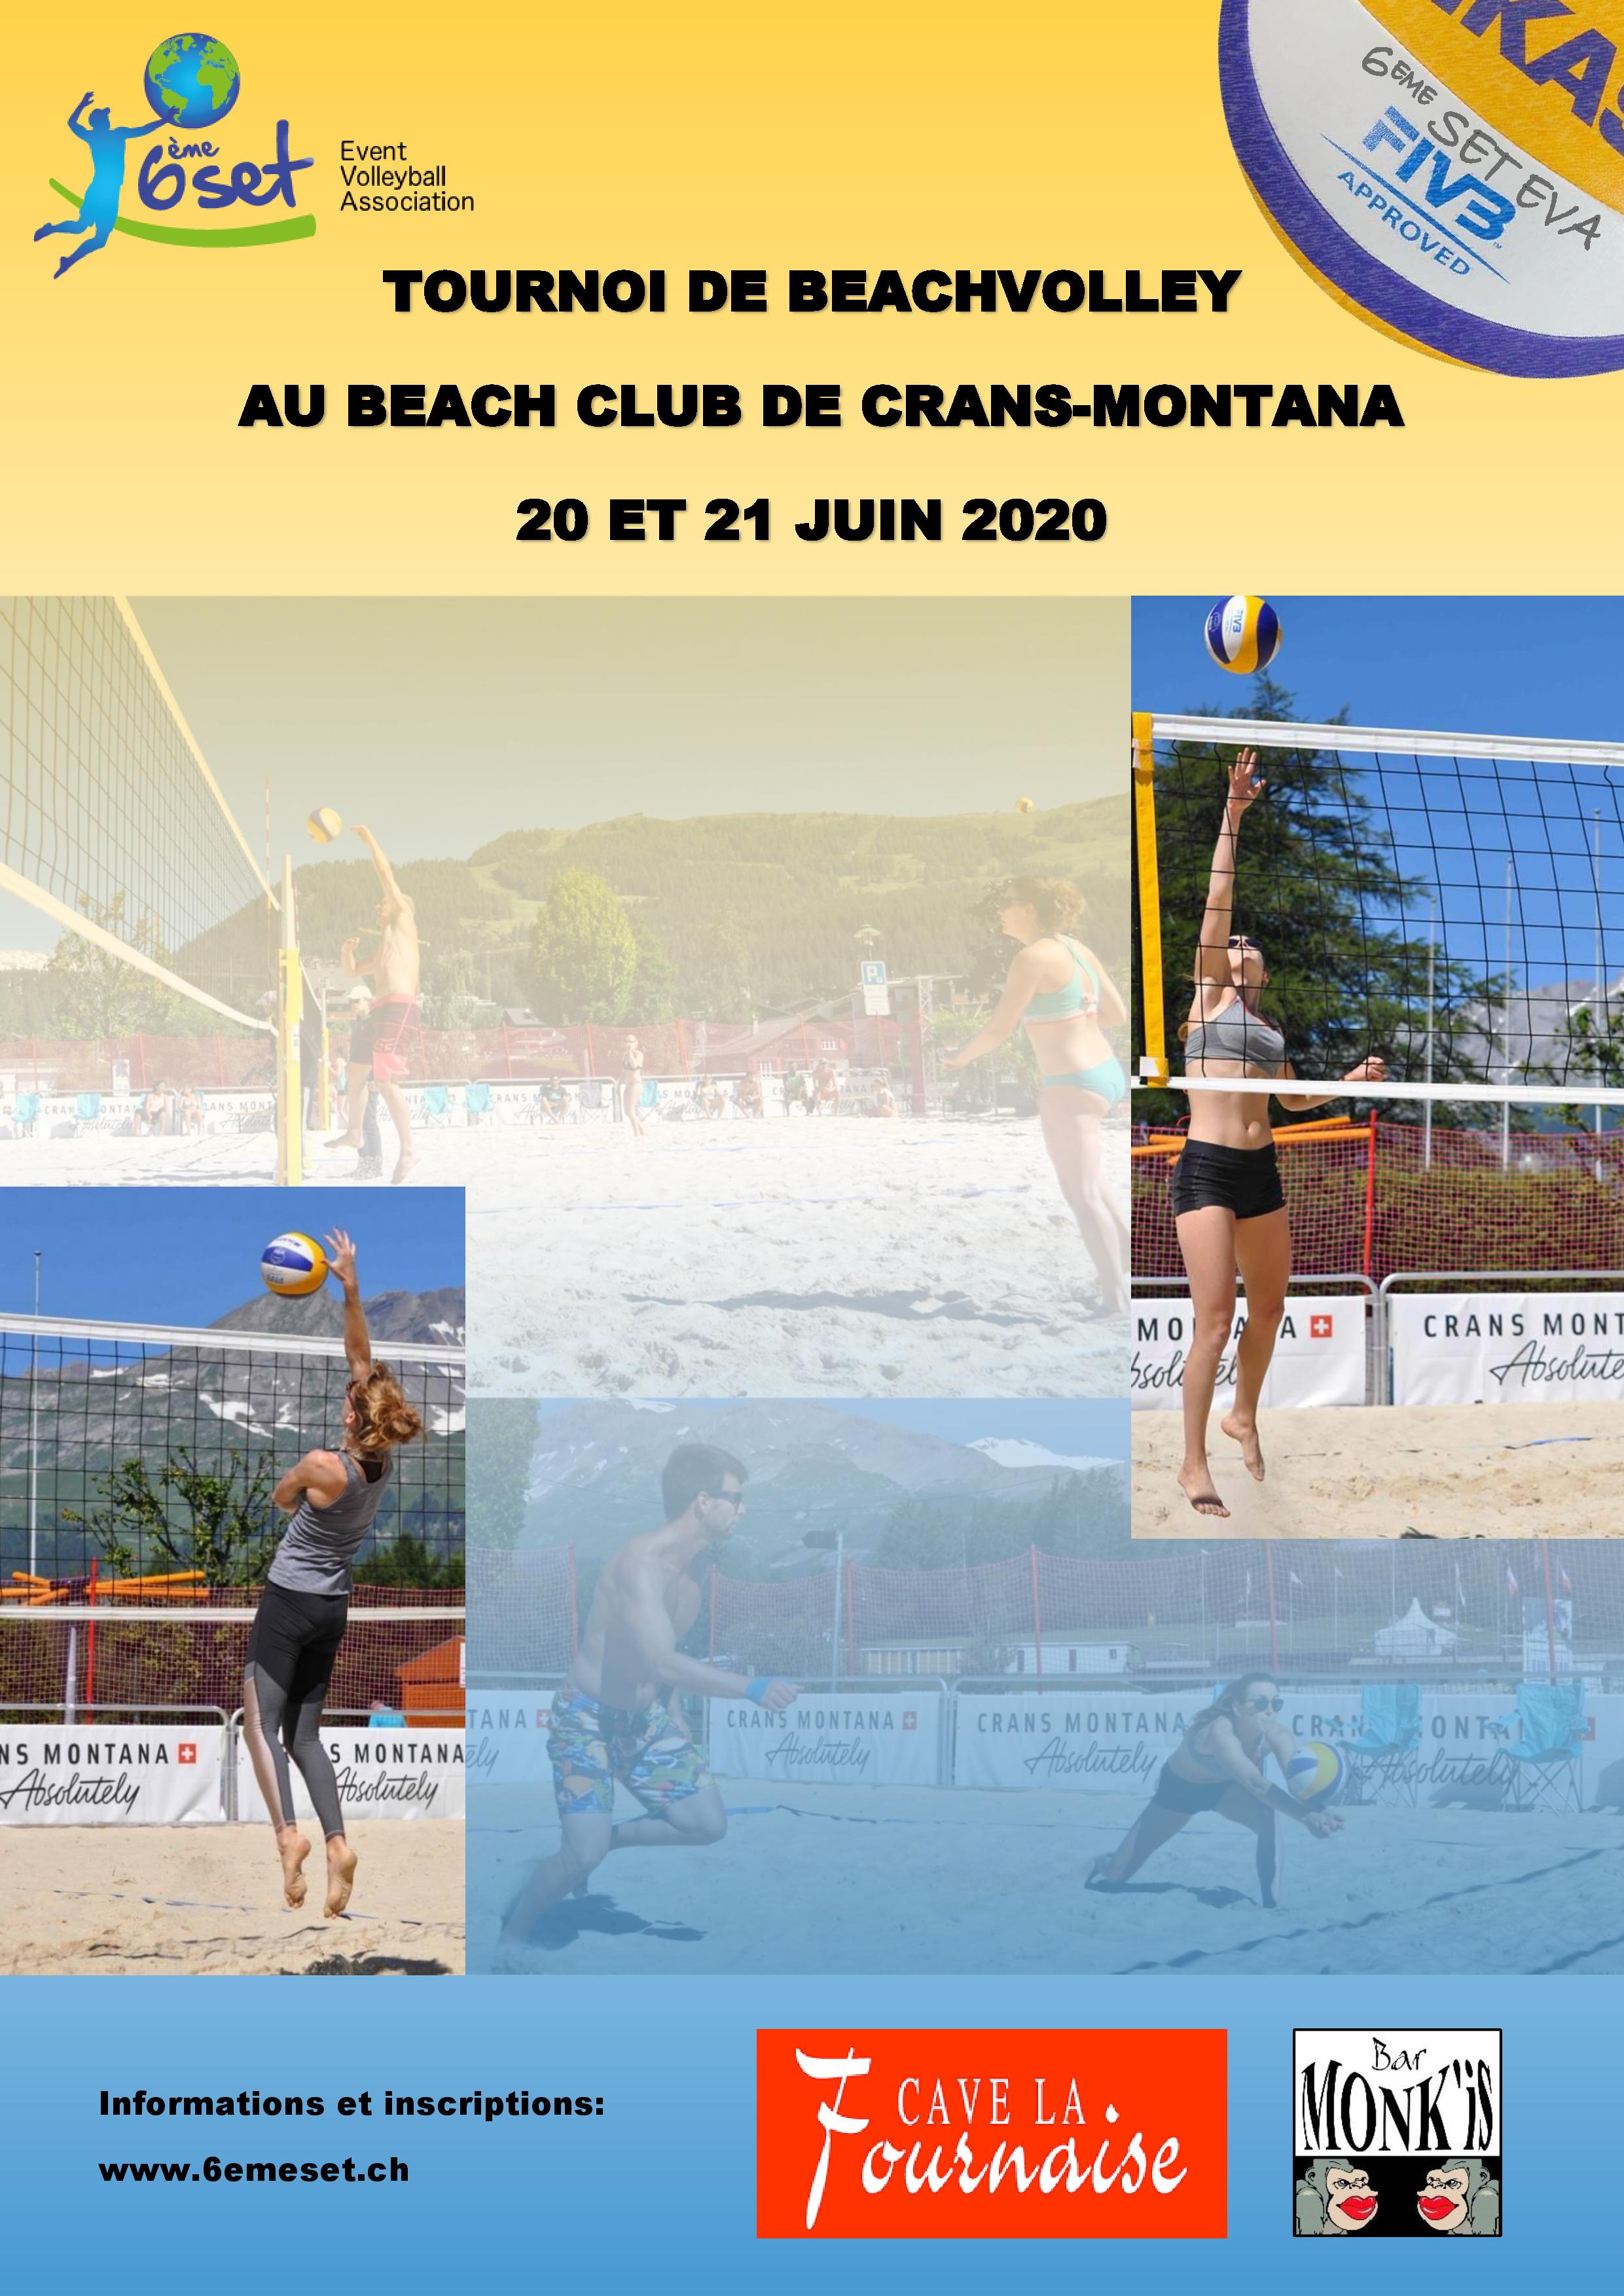 Tournoi de beach-volley, Crans-Montana, 20 et 21 juin 2020